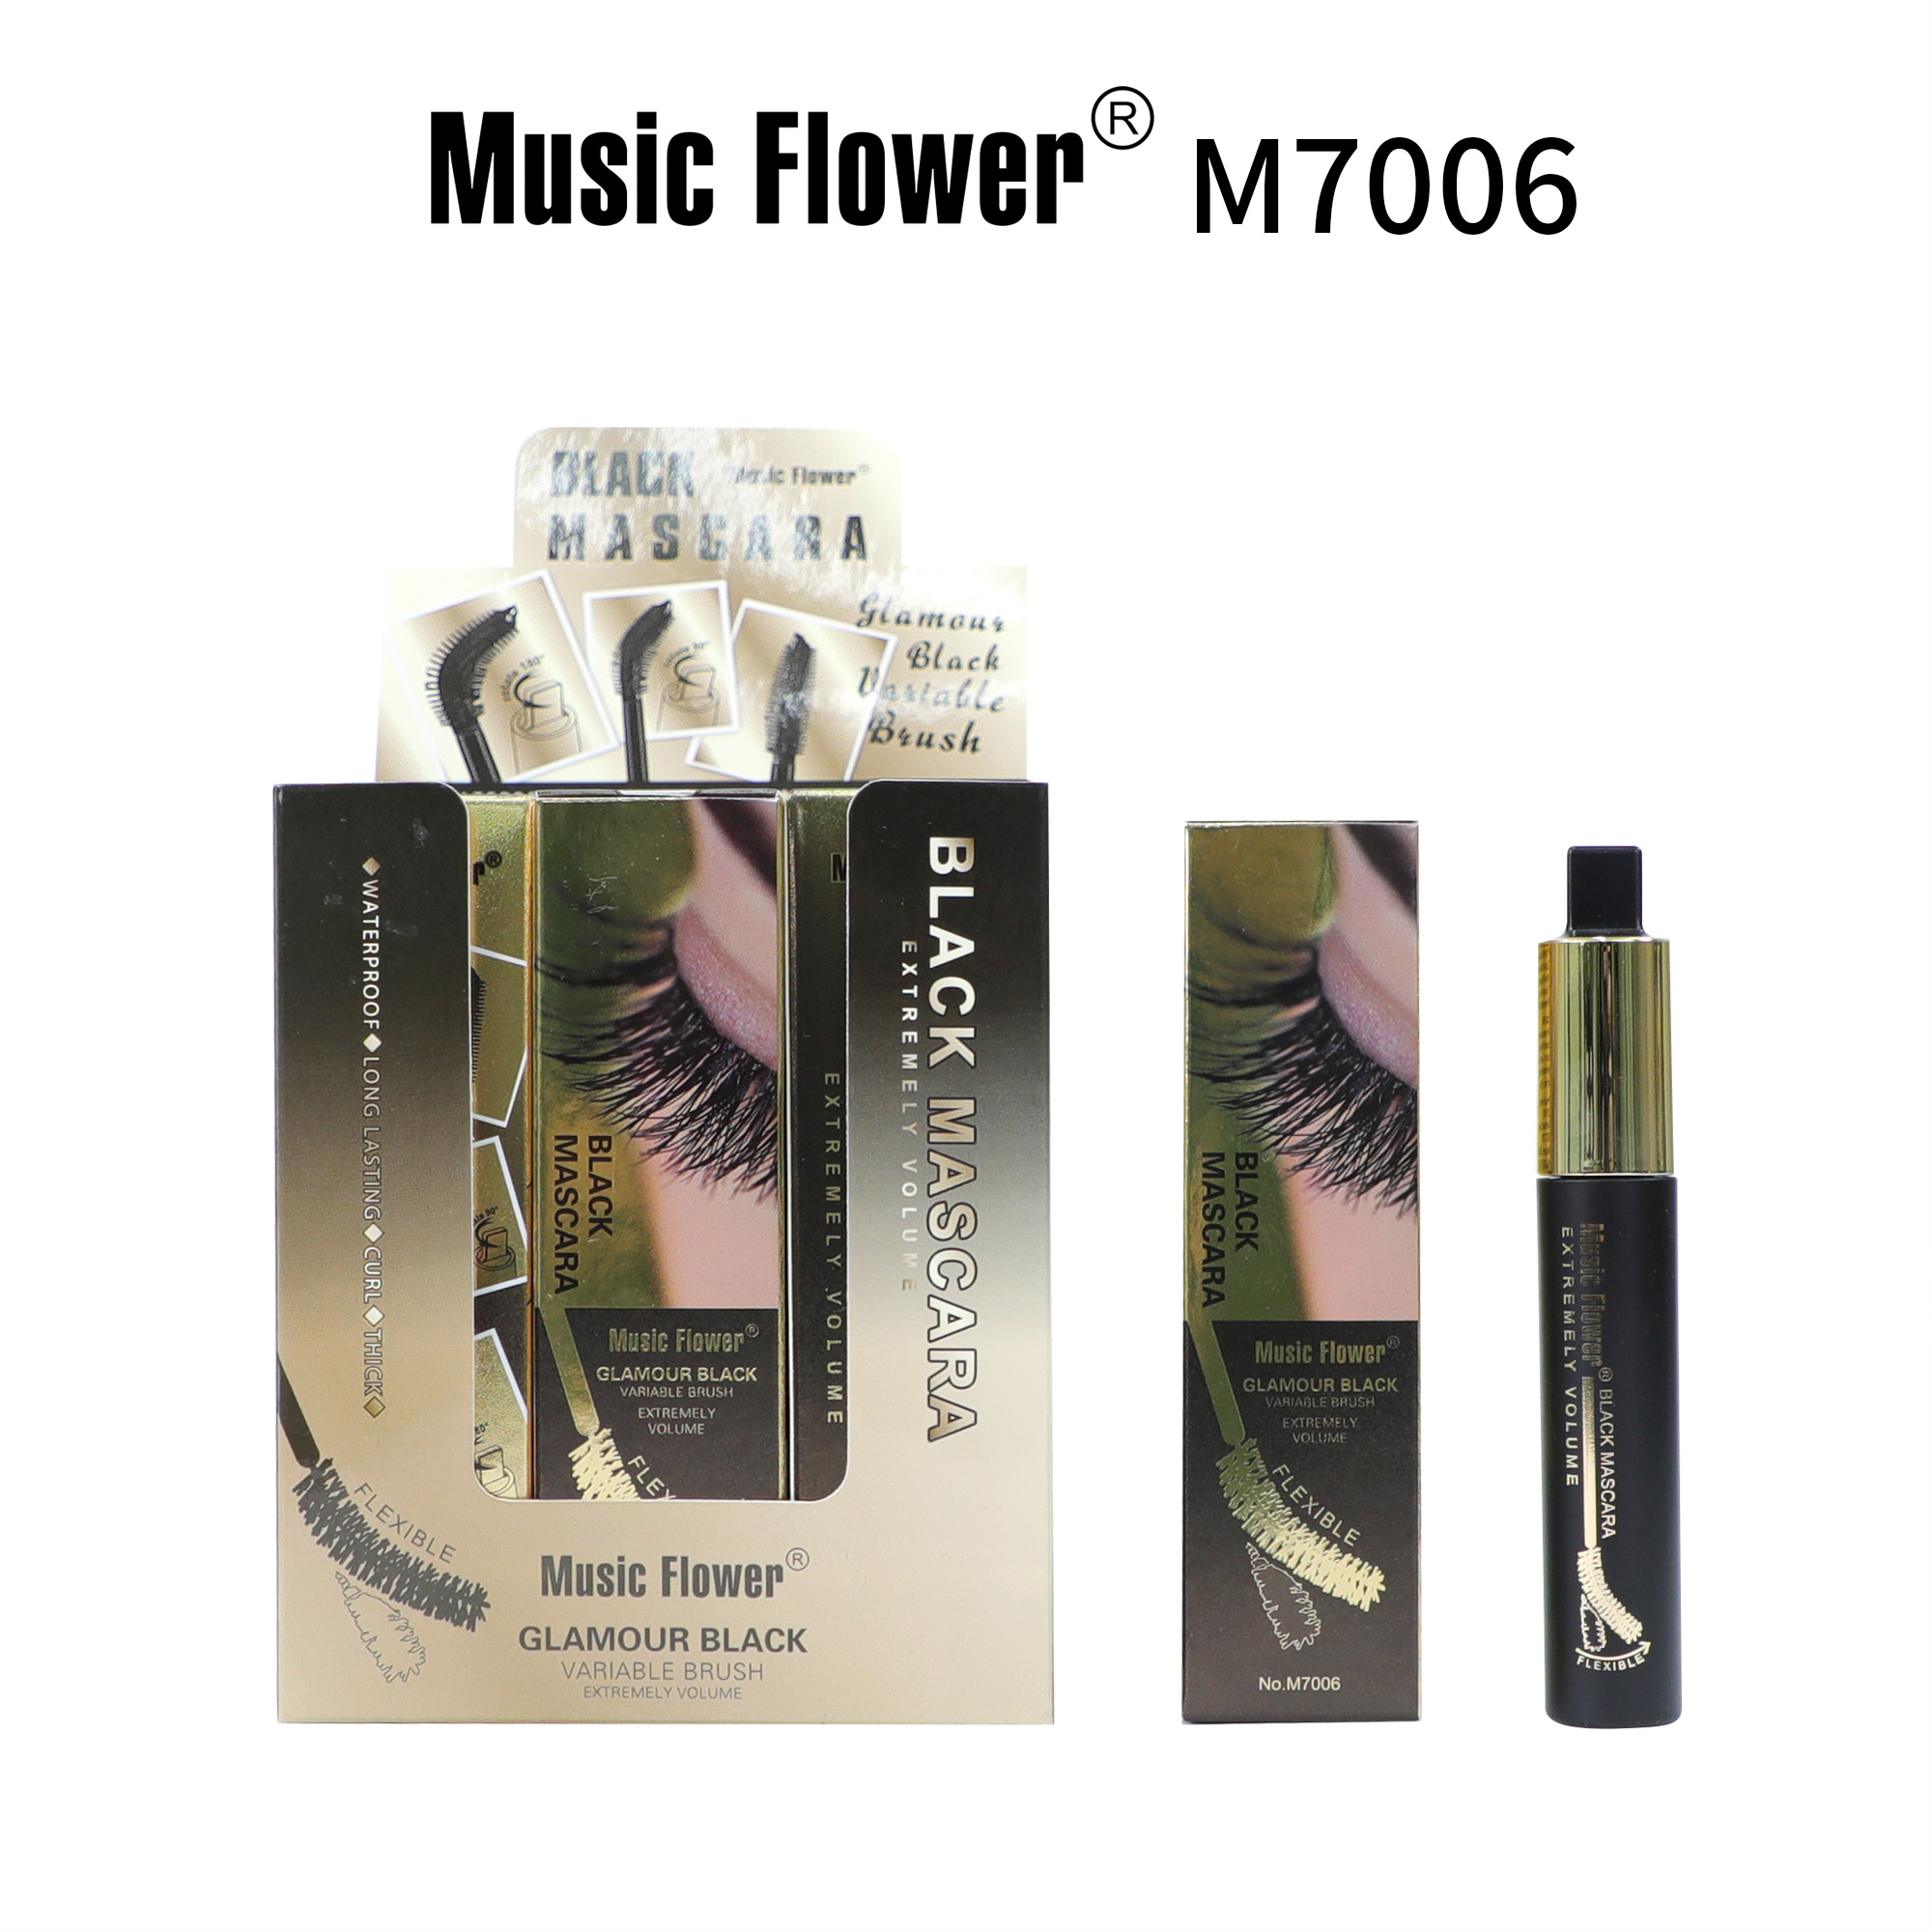 MUSIC FLOWER MASCARA M7006